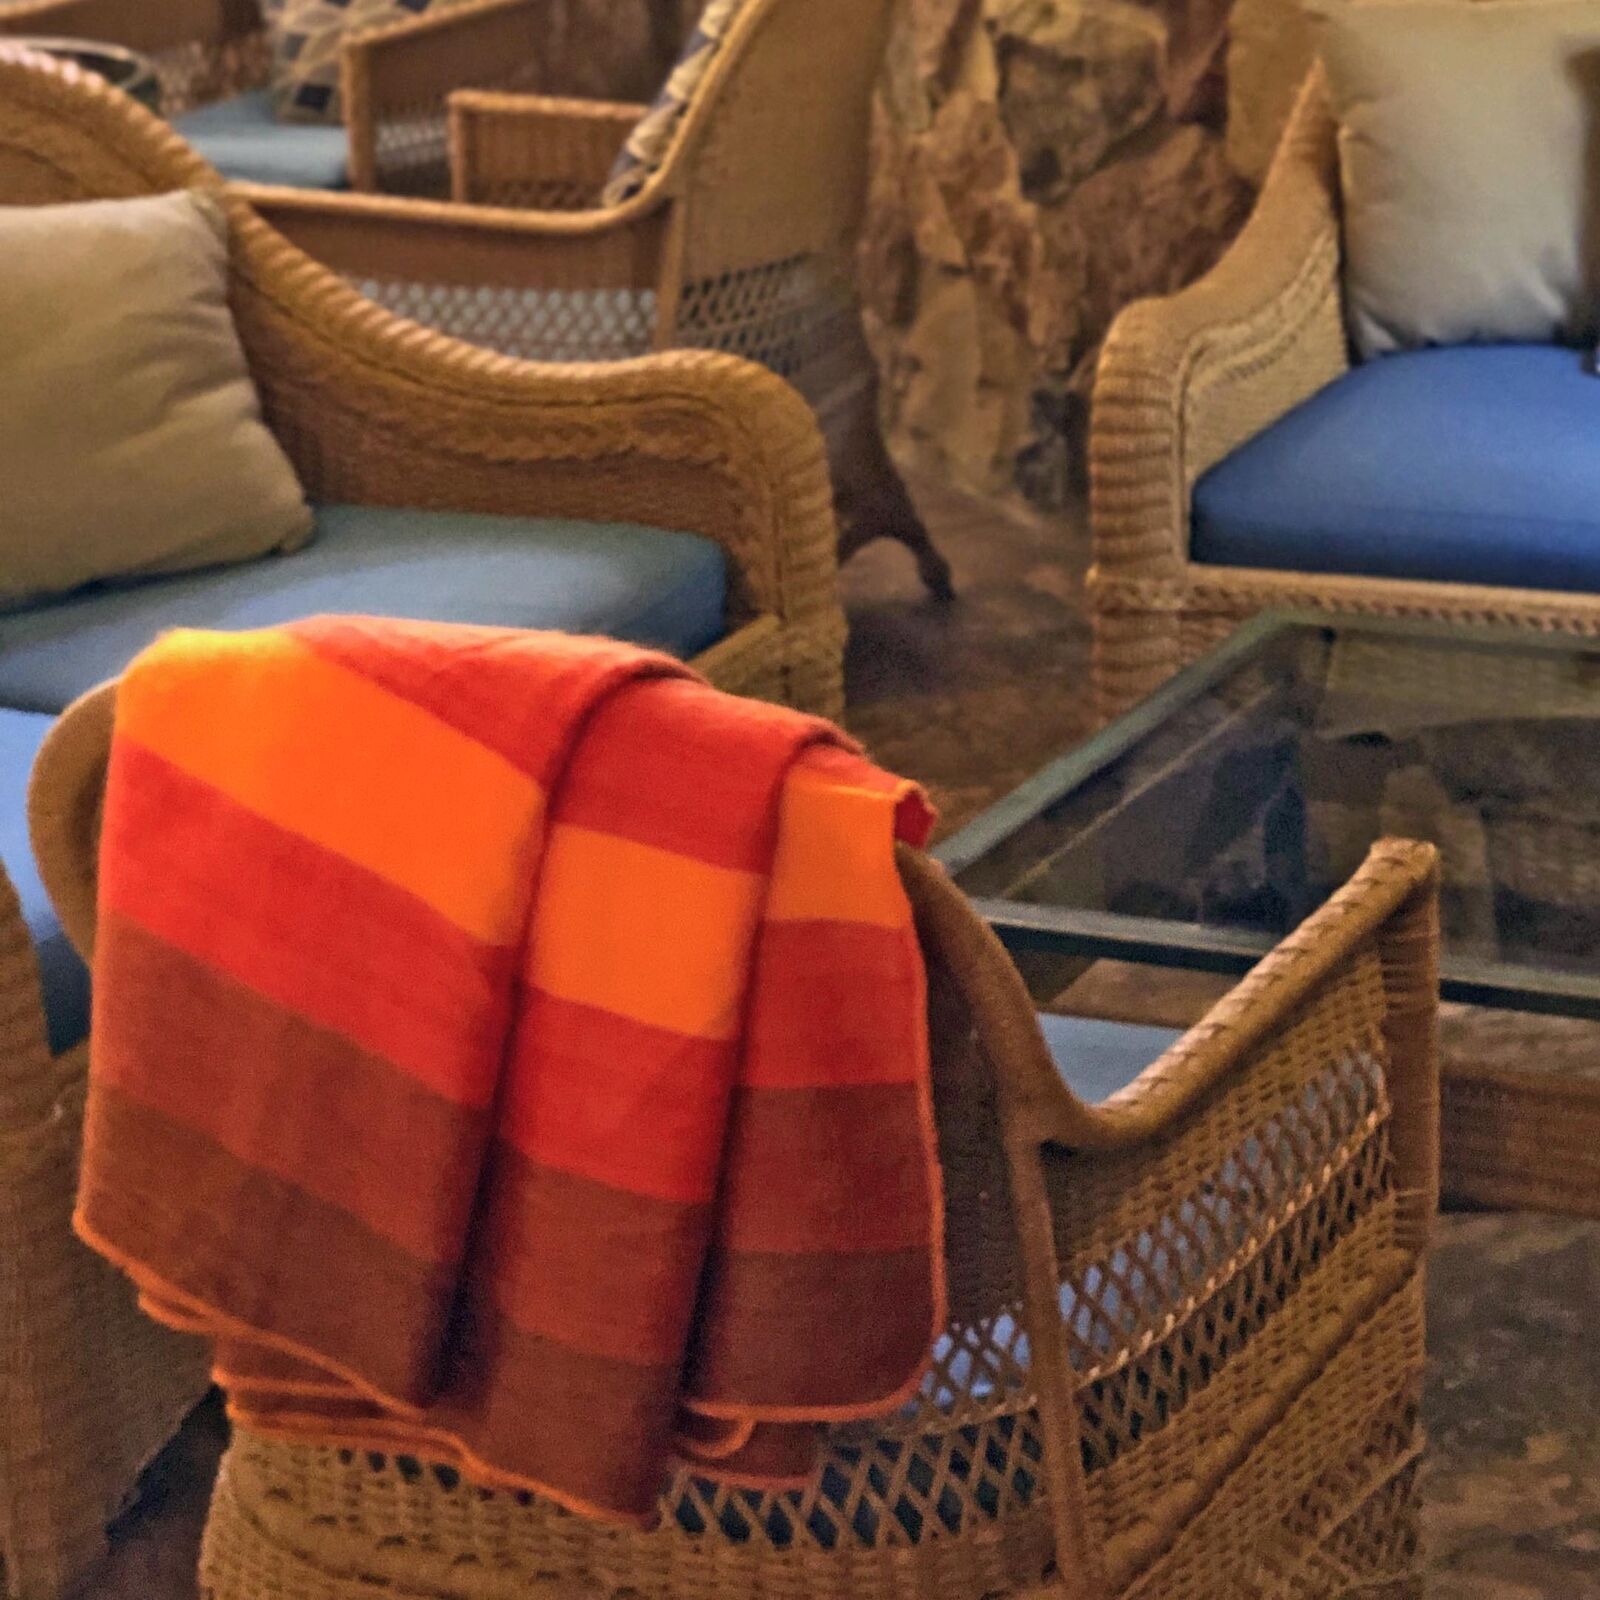 Yacupungu - Baby Alpaca Wool Throw Blanket / Sofa Cover - Queen 90" x 65" - thick stripes pattern orange